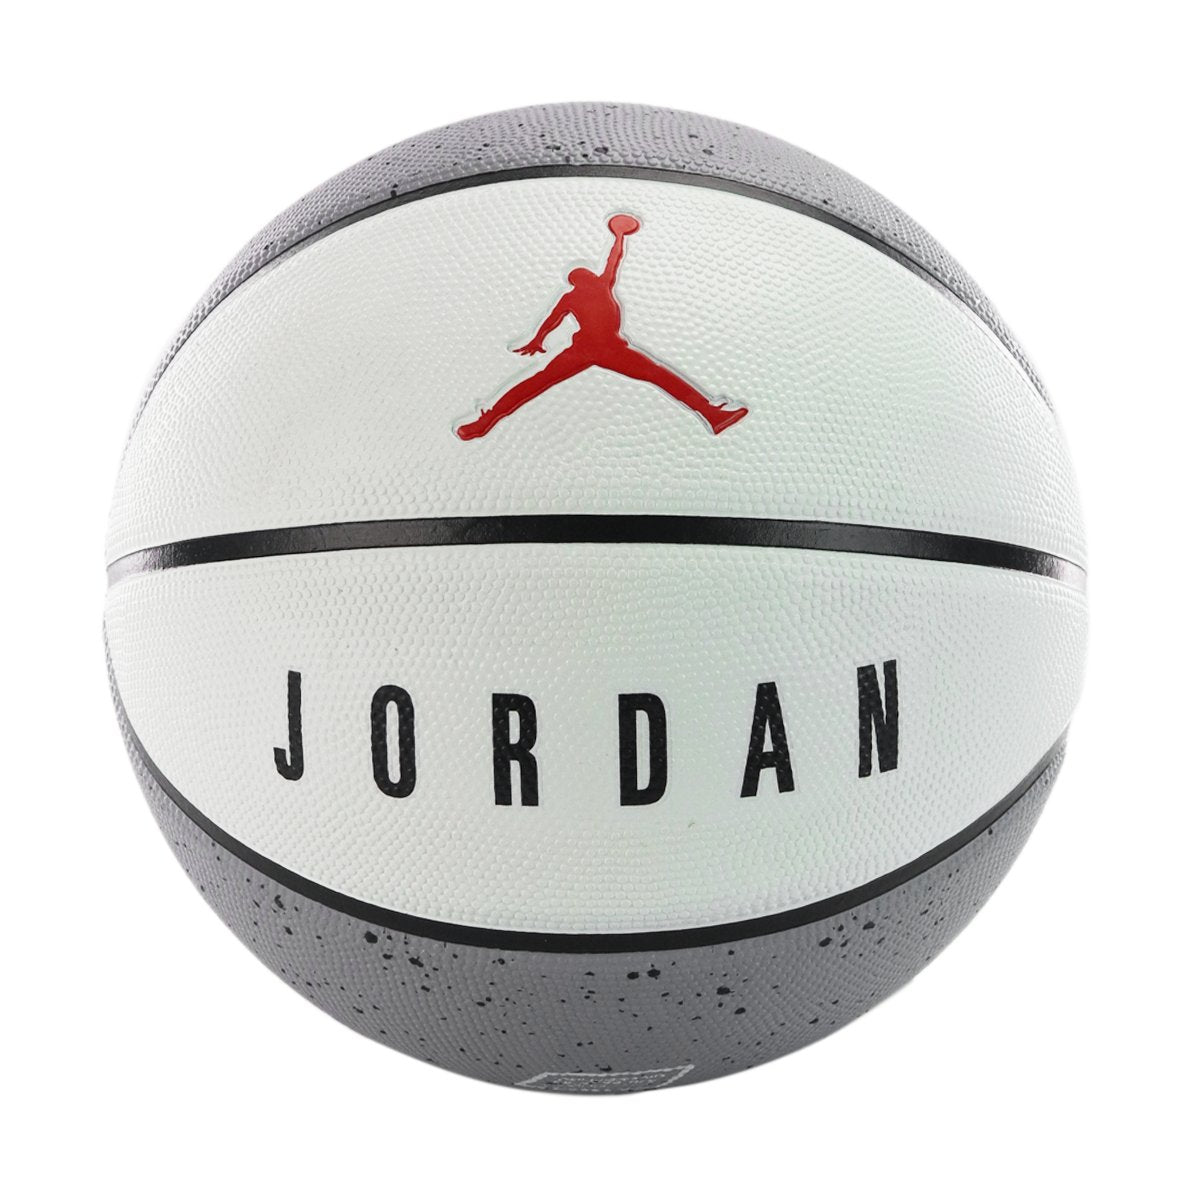 Jordan Playground 2.0  8 Panel Basketball Gr. 7 9018/10 9884 049-